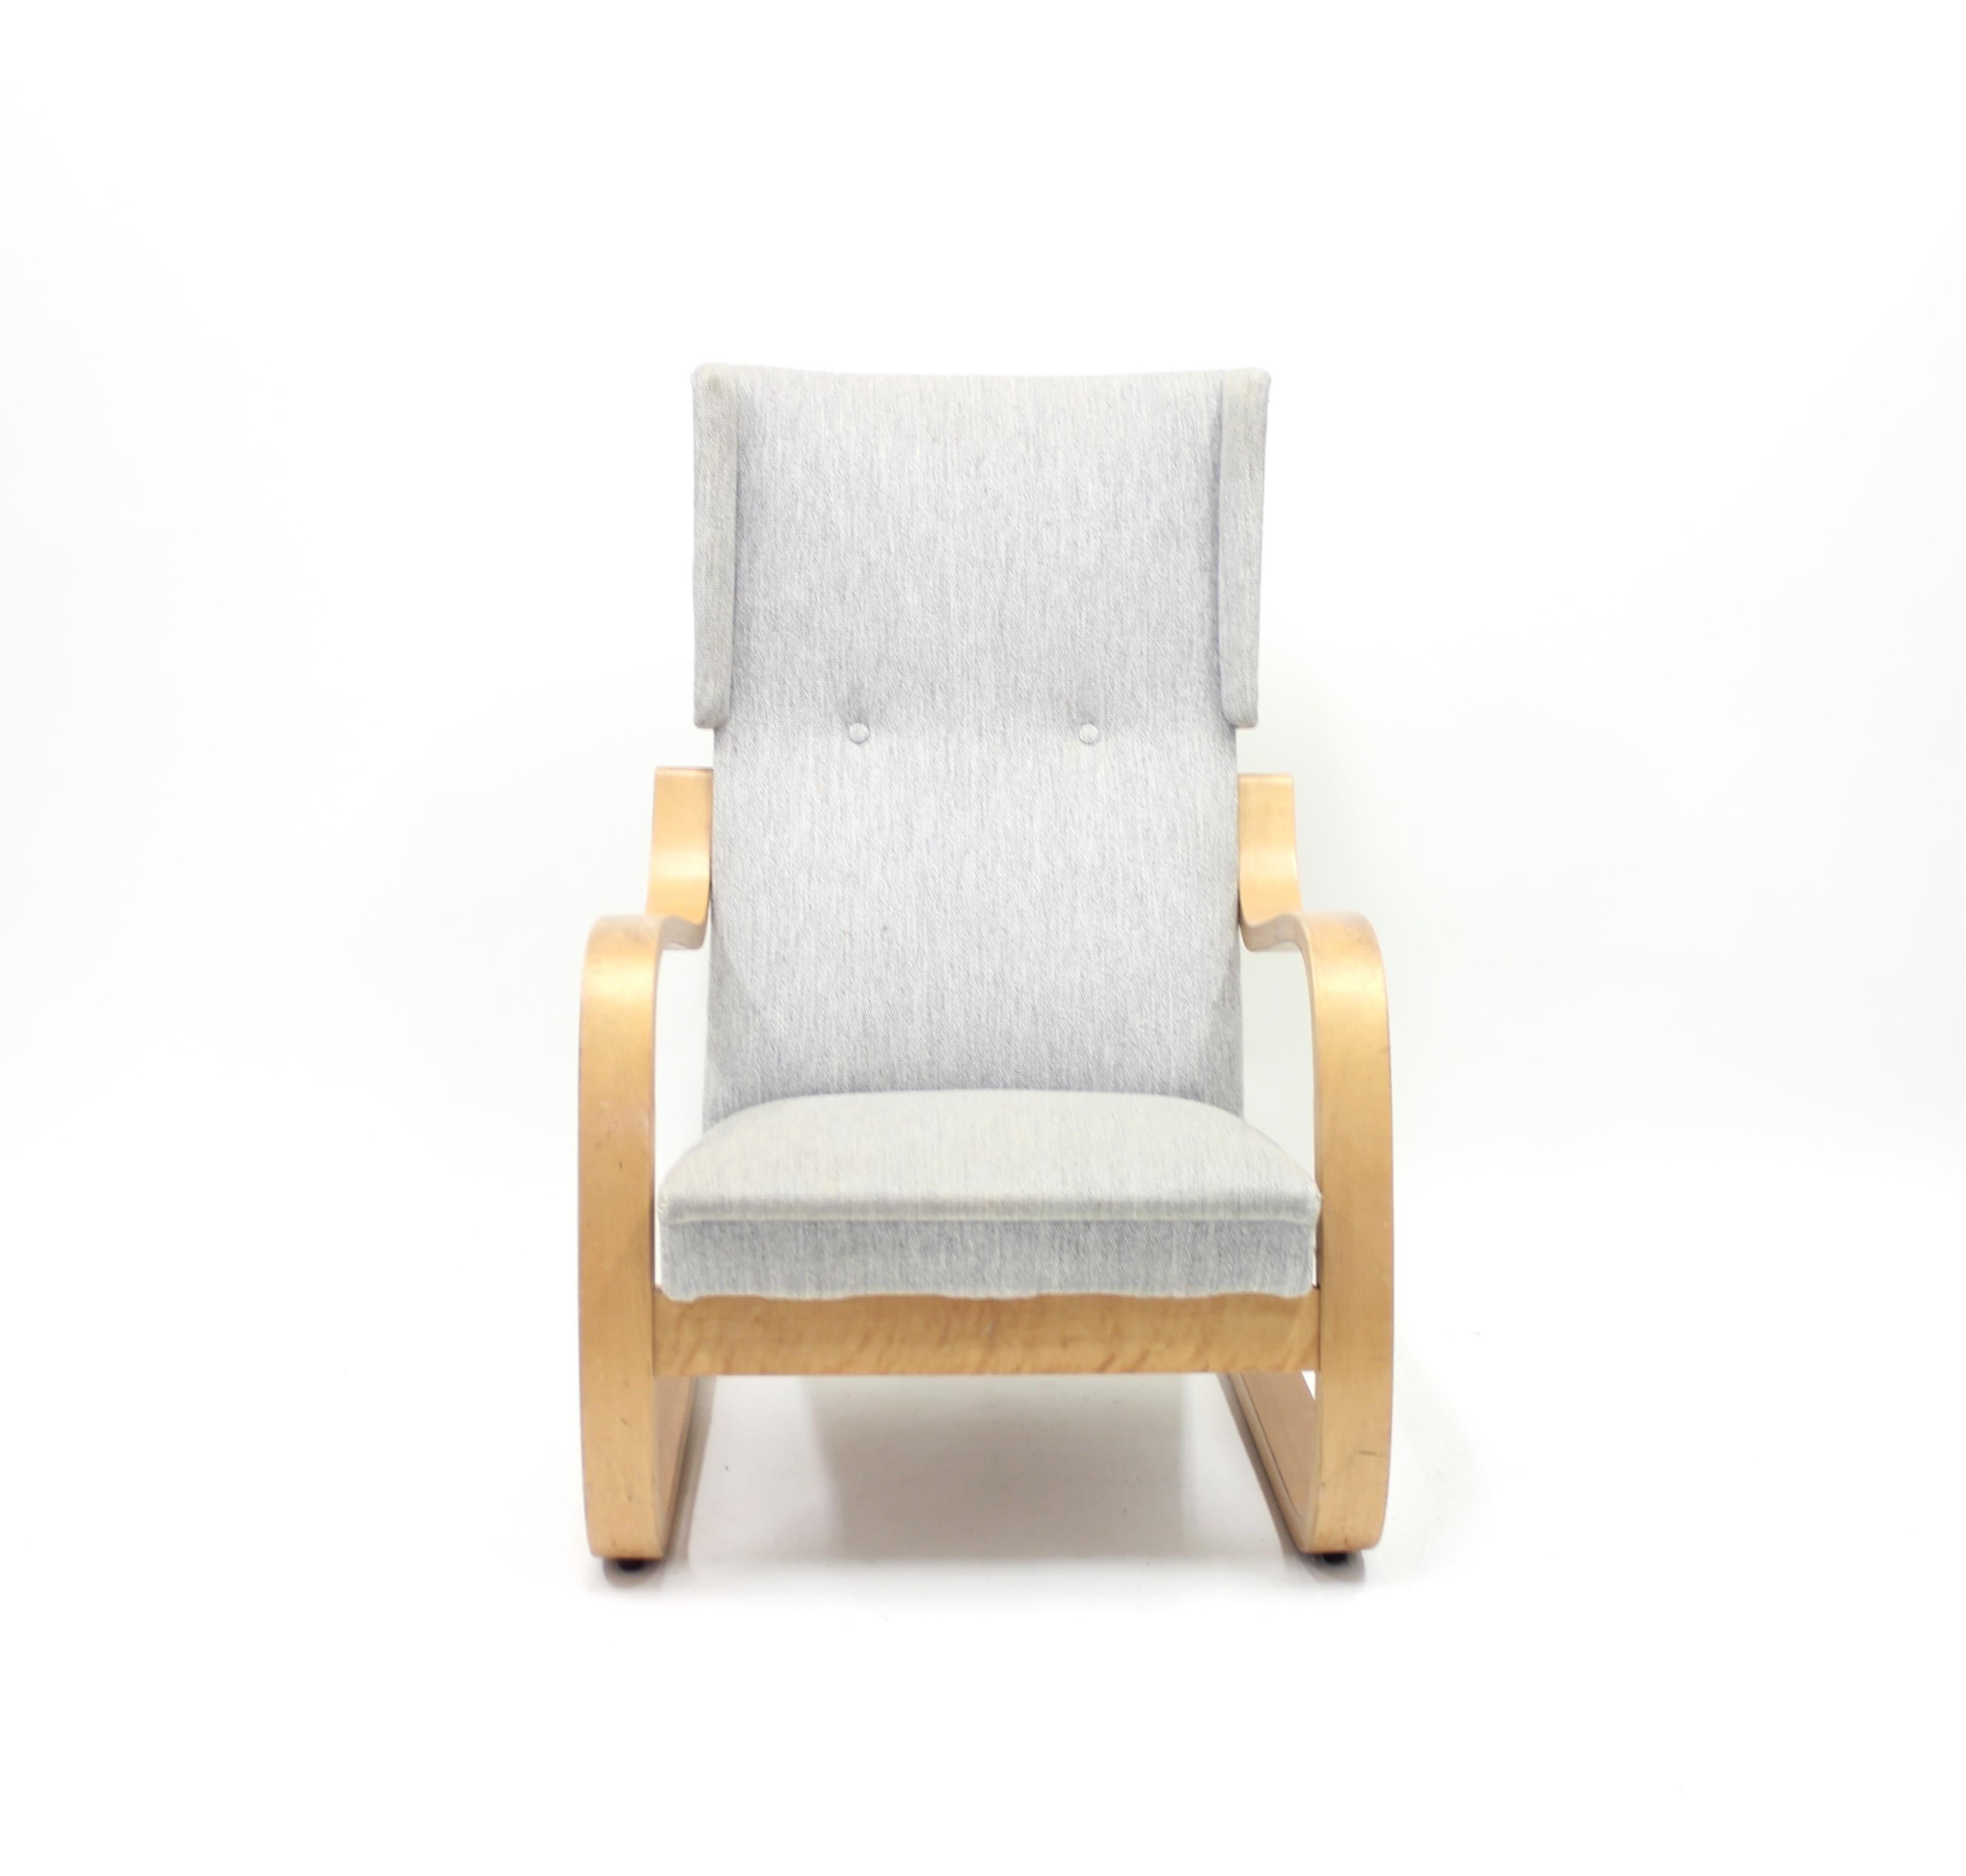 Swedish Very Special Model 36/401 Easy Chair by Alvar Aalto for Artek, Hedemora